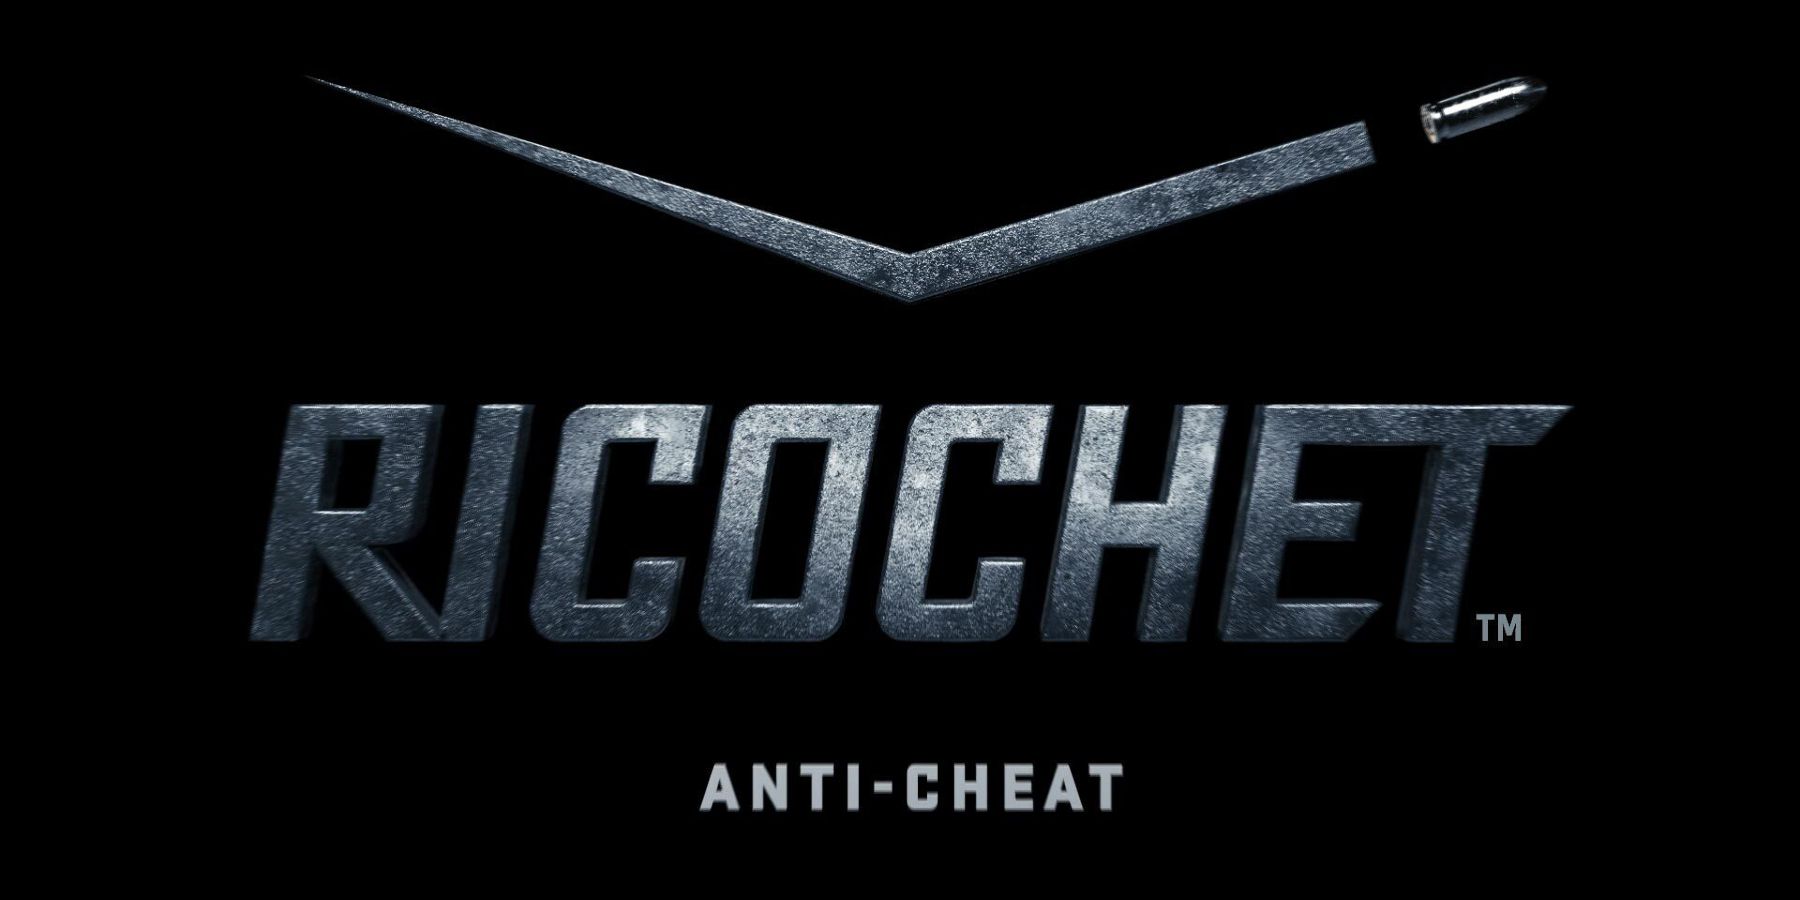 ricochet anti-cheat logo